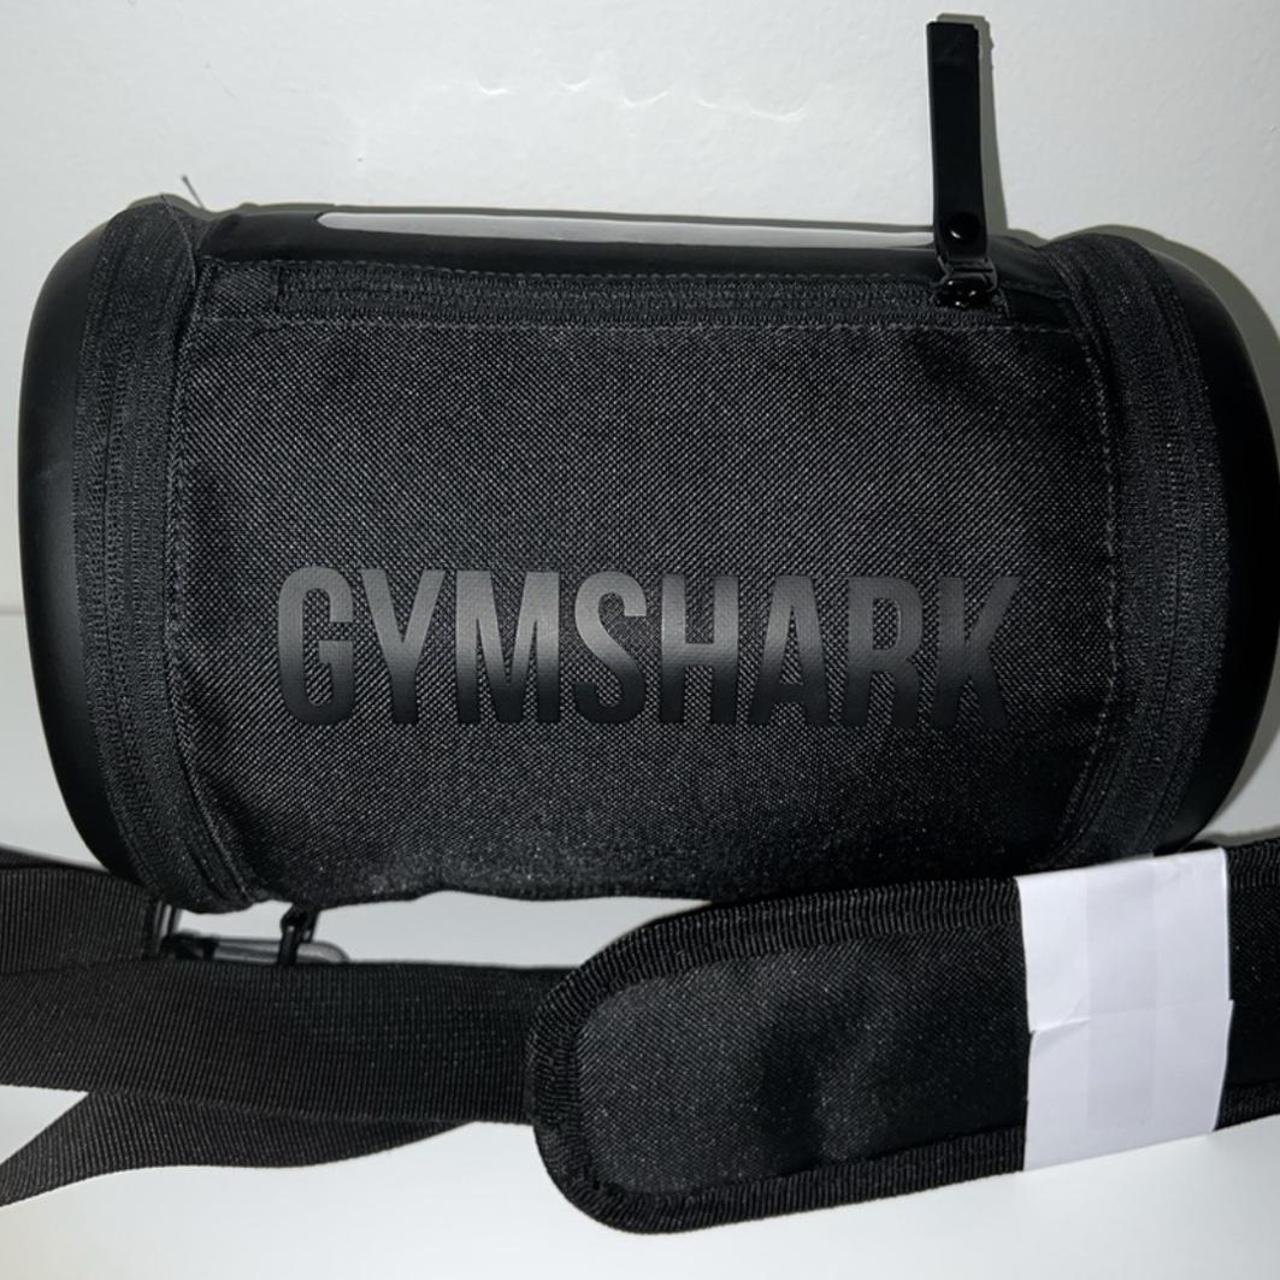 Cool BAPE duffle bag for your baecation or gym brand - Depop